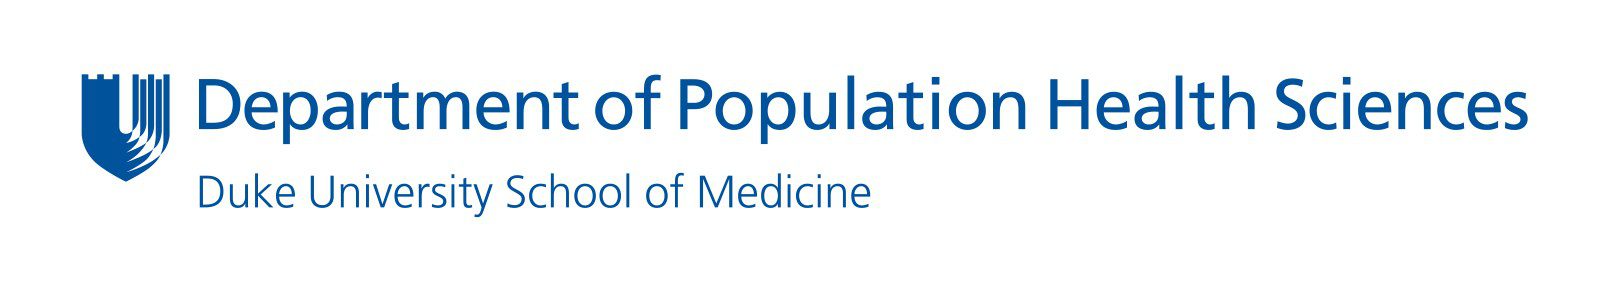 Department of Population Health Sciences | Duke University School of Medicine